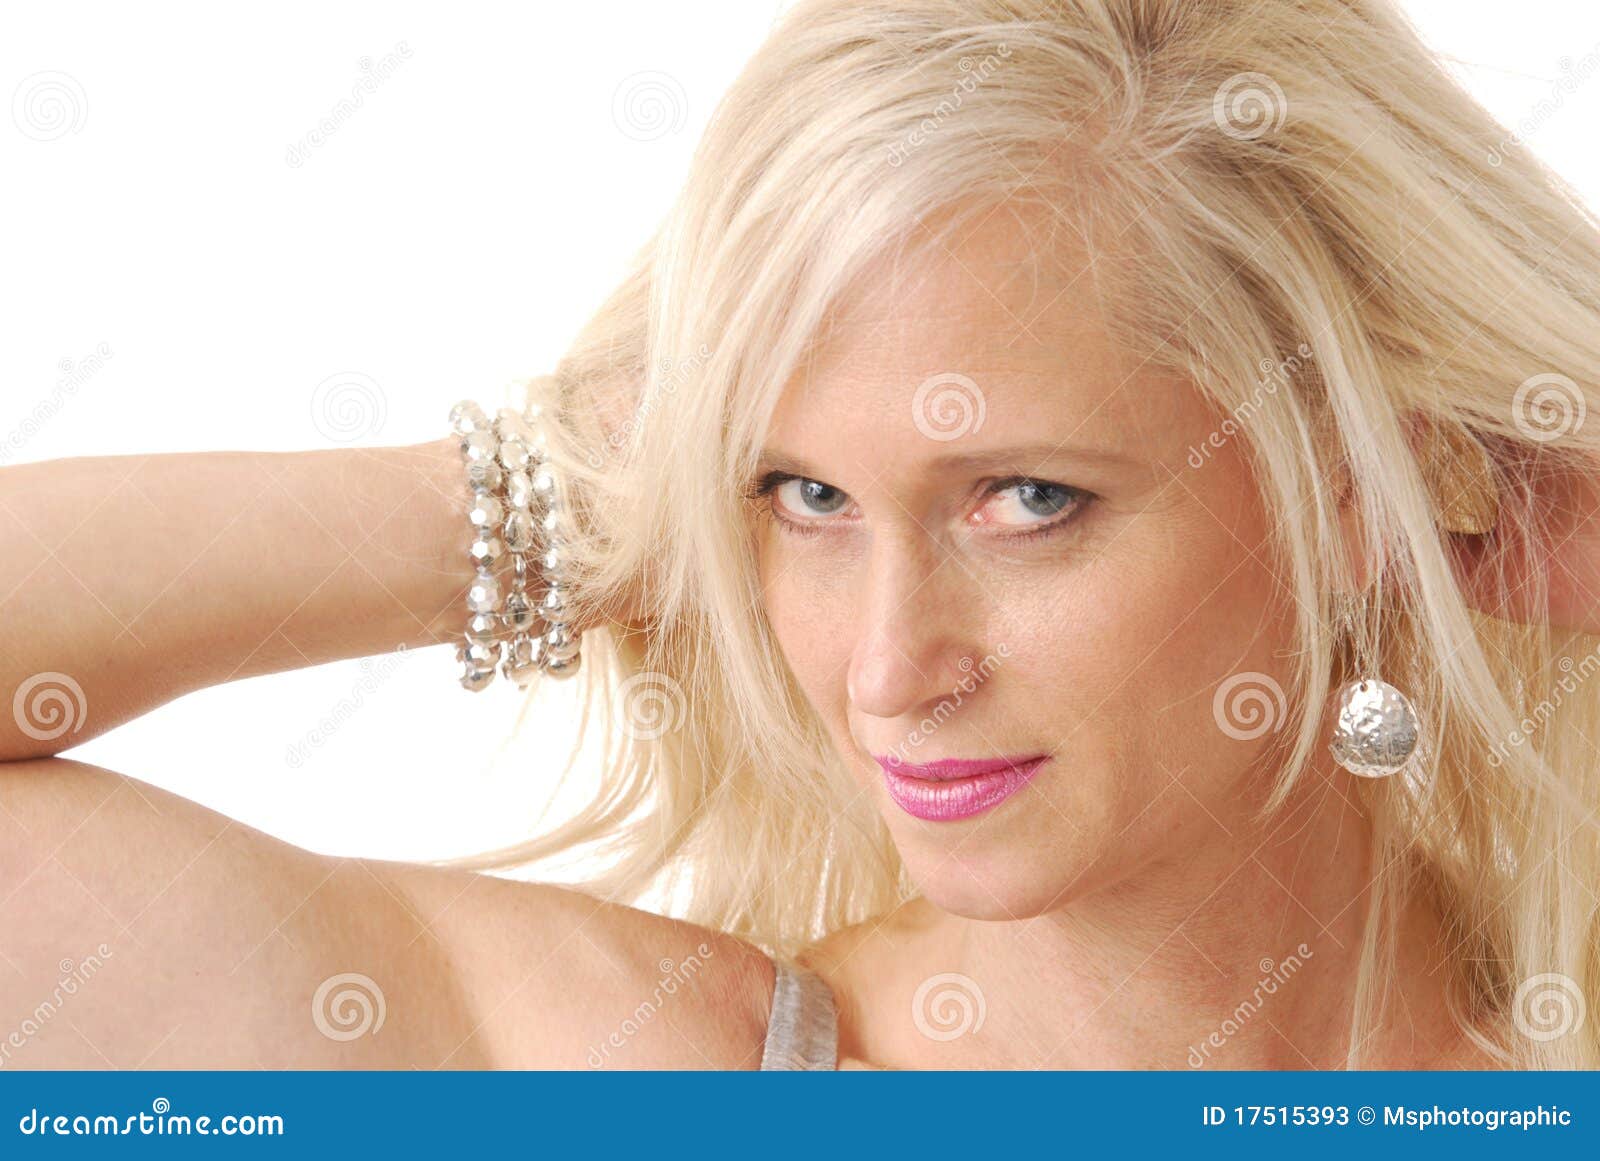 Glamorous woman stock image. Image of high, portrait - 17515393